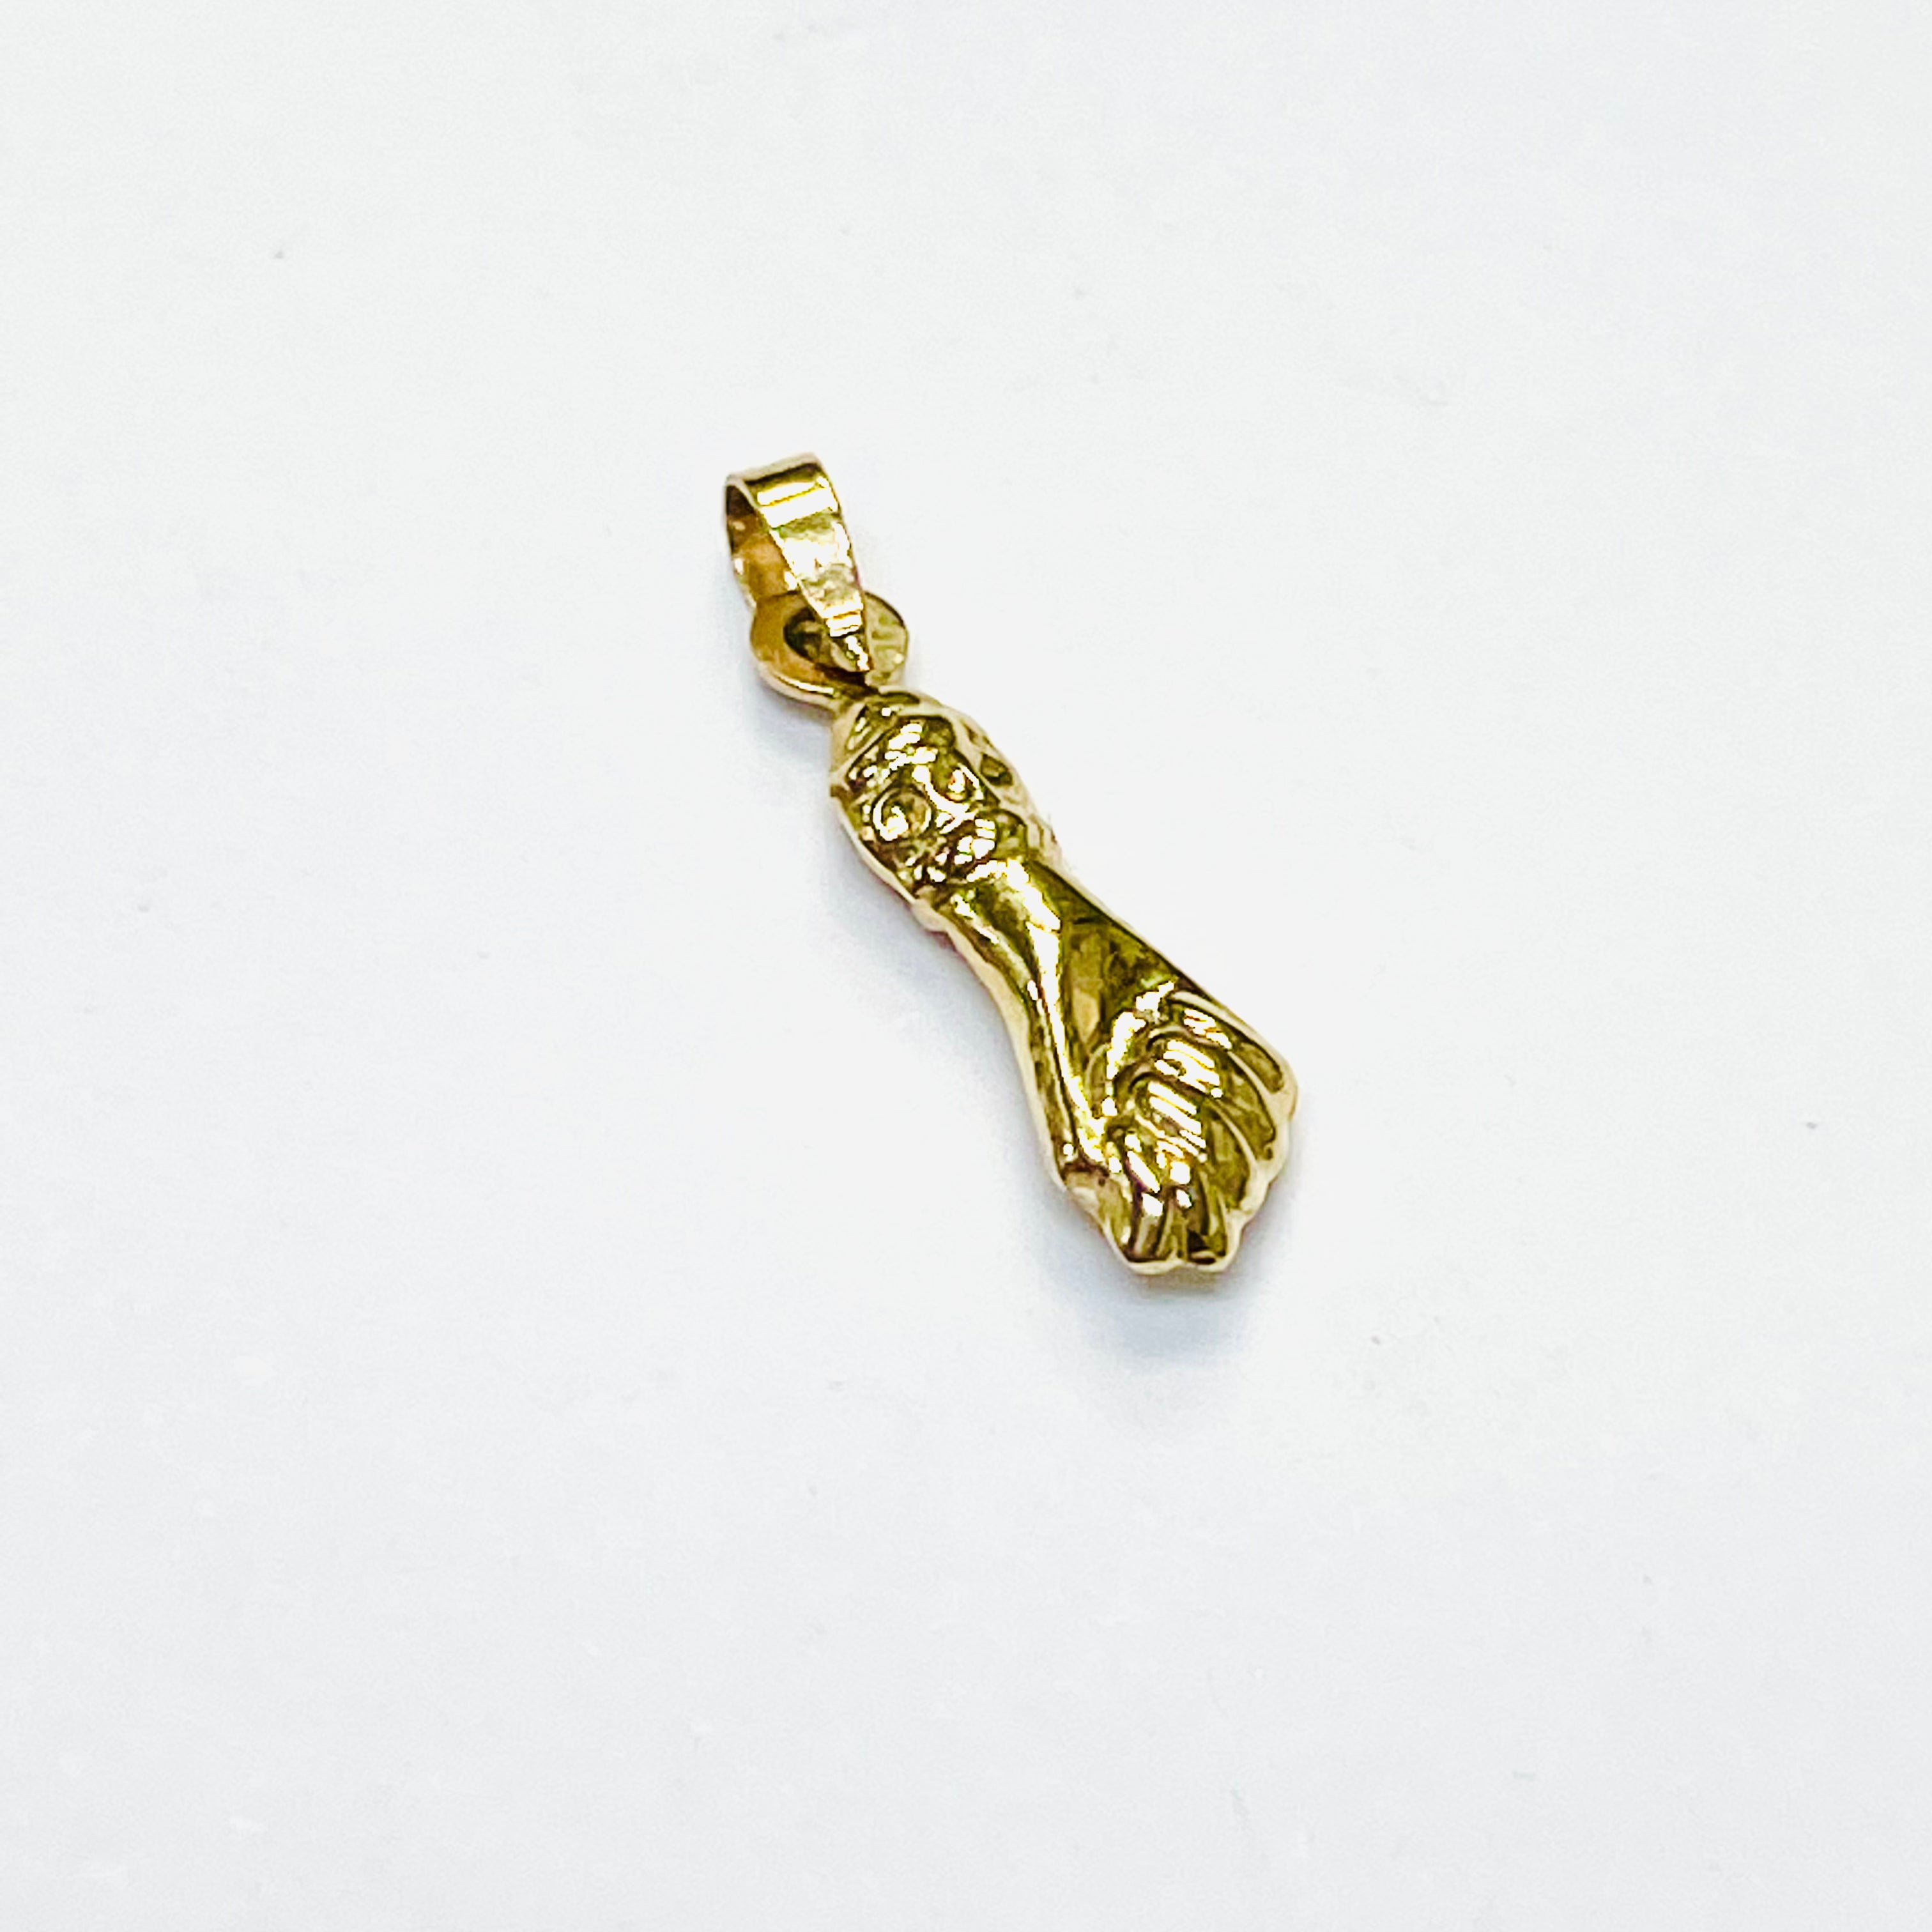 Mini 14K Yellow Gold Figa Fist Charm Pendant